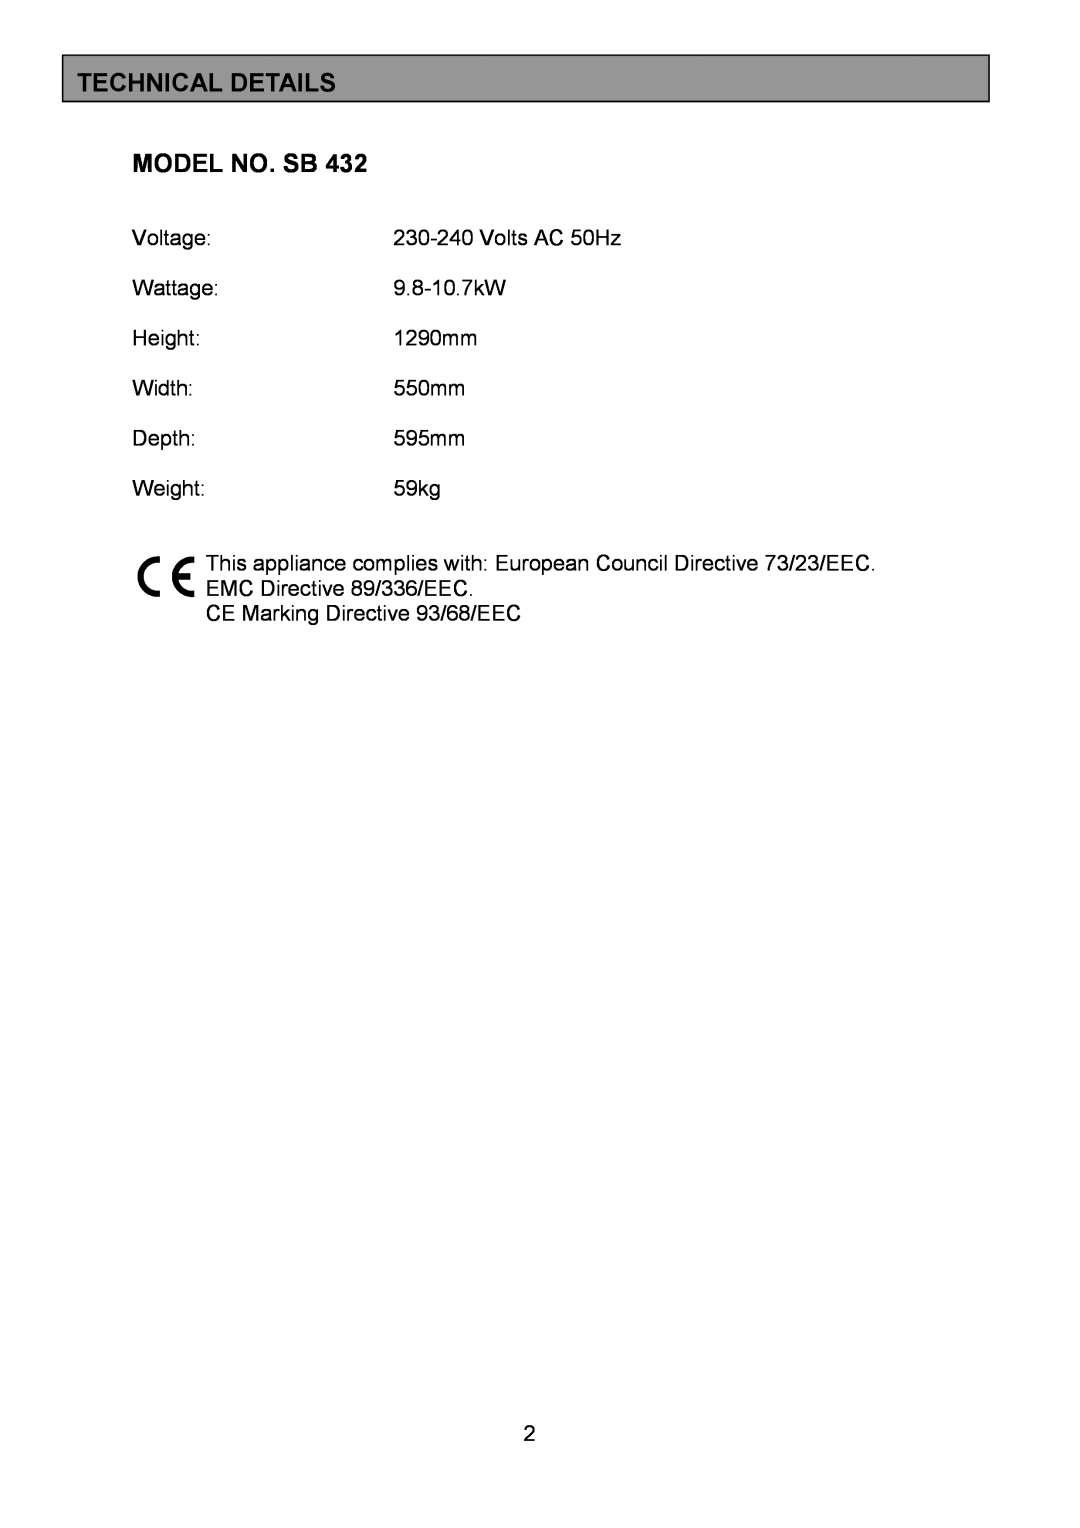 Tricity Bendix SB432 Technical Details, Model No. Sb, Voltage, Volts AC 50Hz, CE Marking Directive 93/68/EEC 